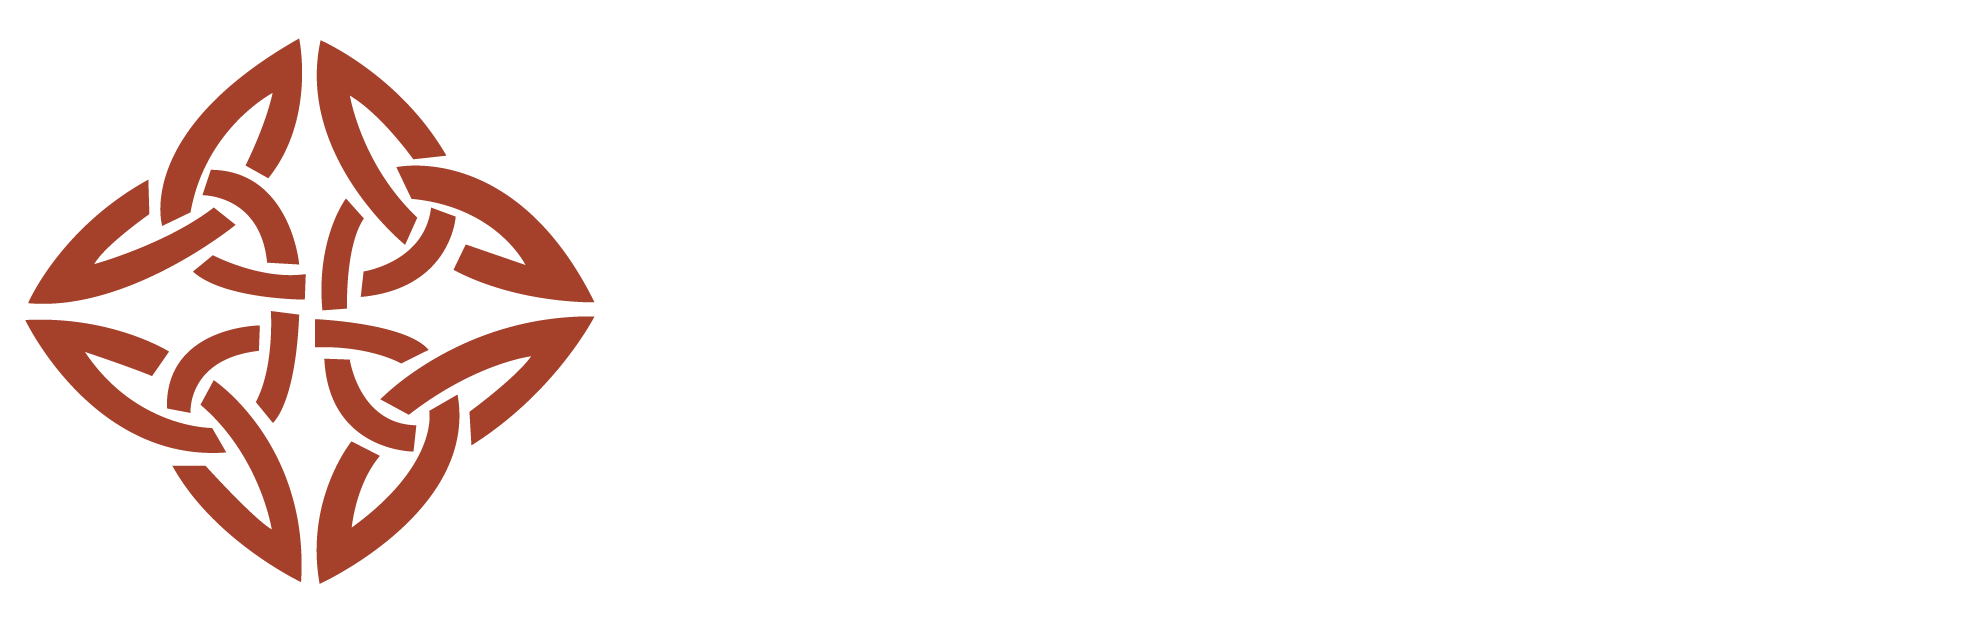 Hotel kasdar|Guest House|Accomodation